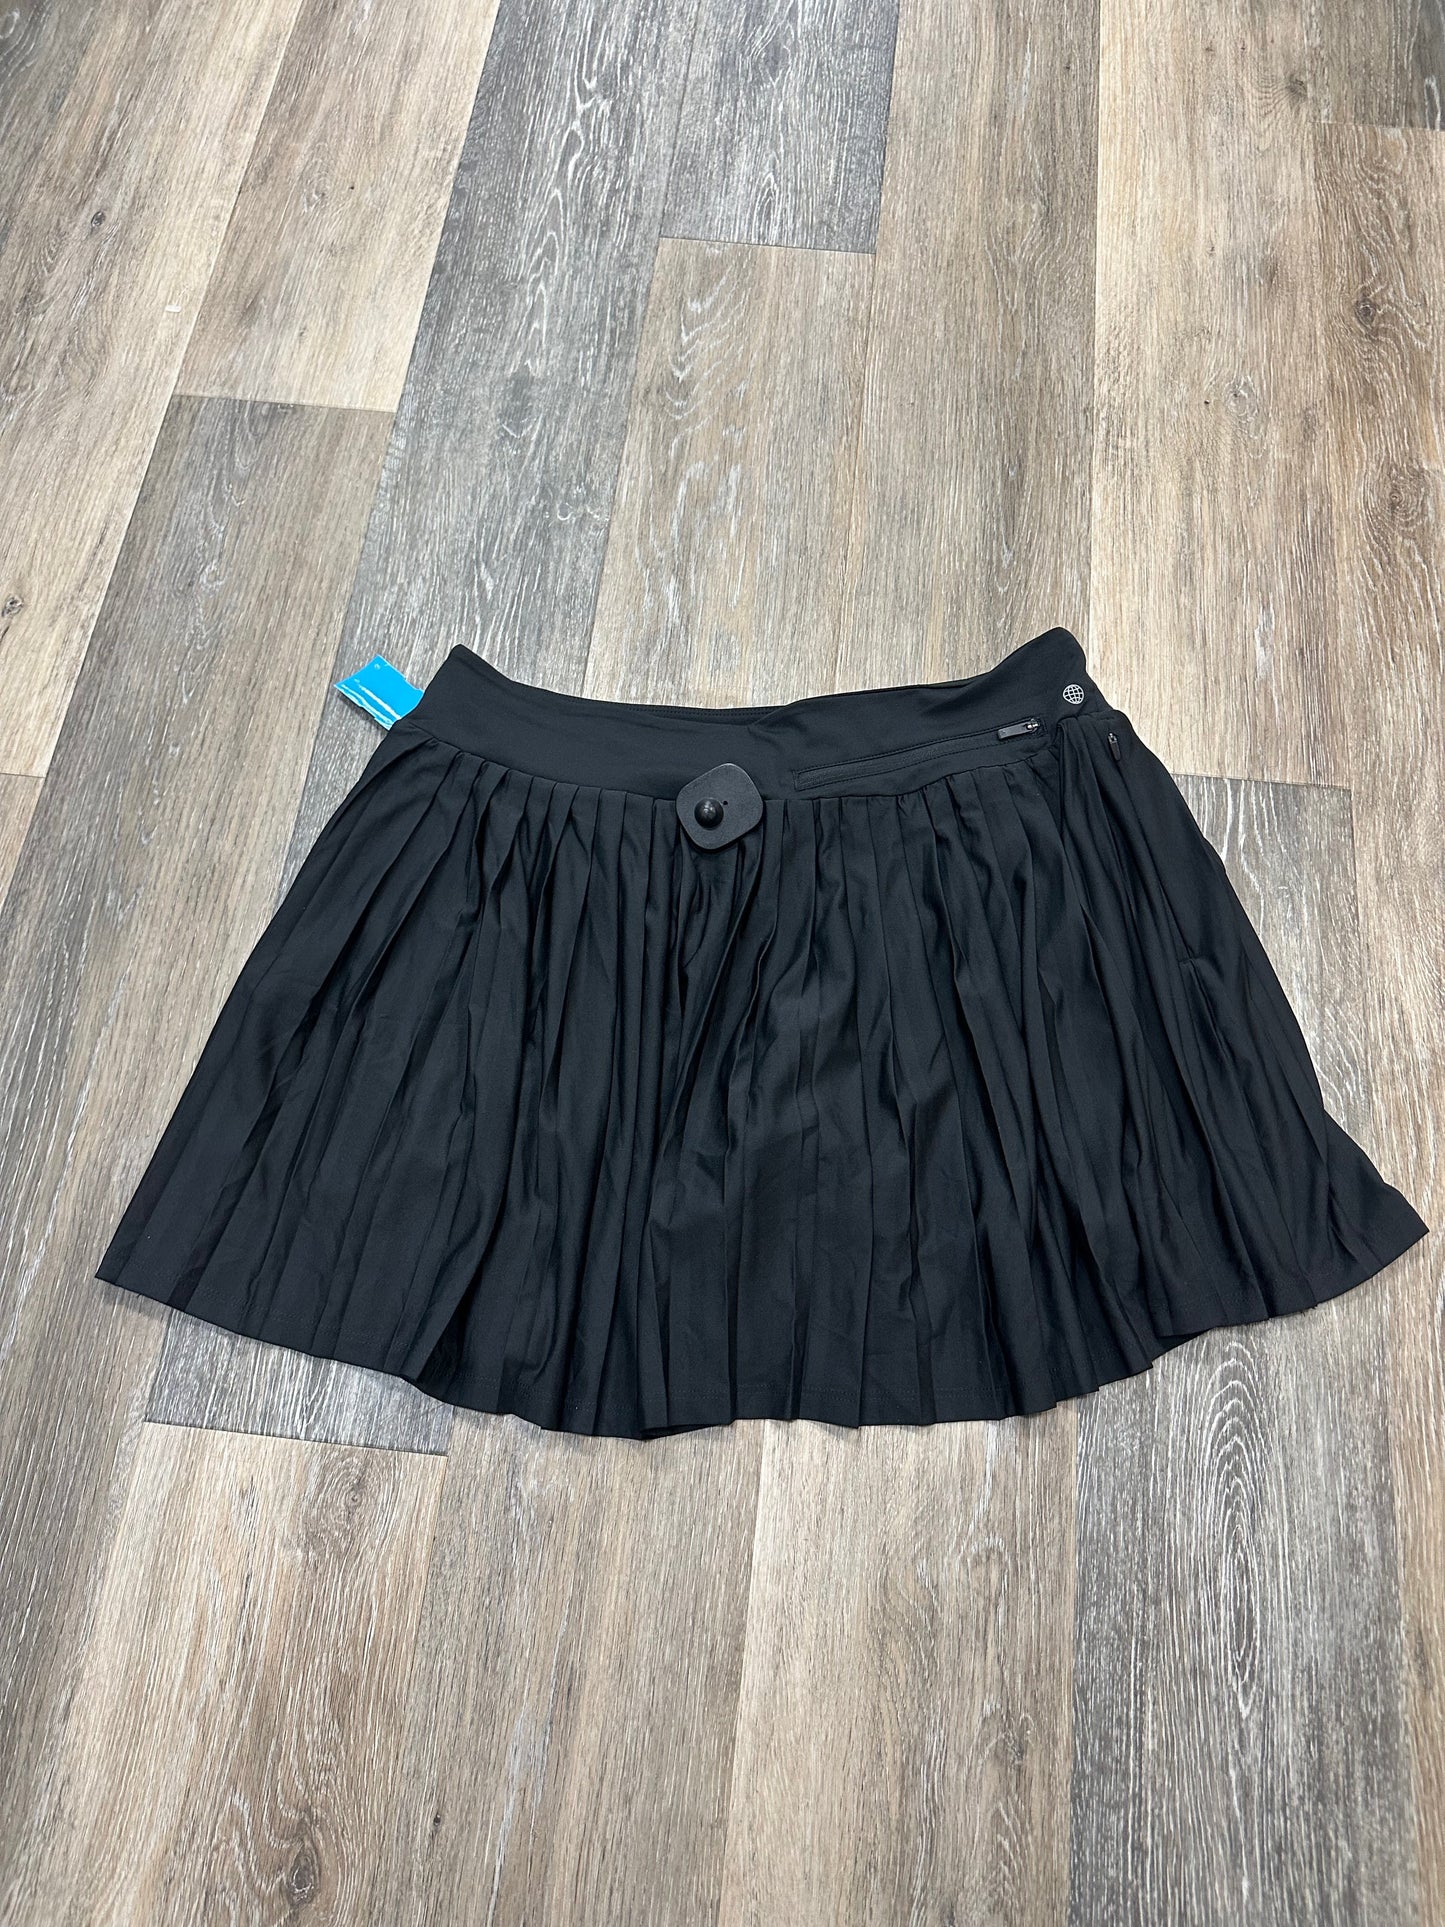 Black Athletic Skirt Adidas, Size M